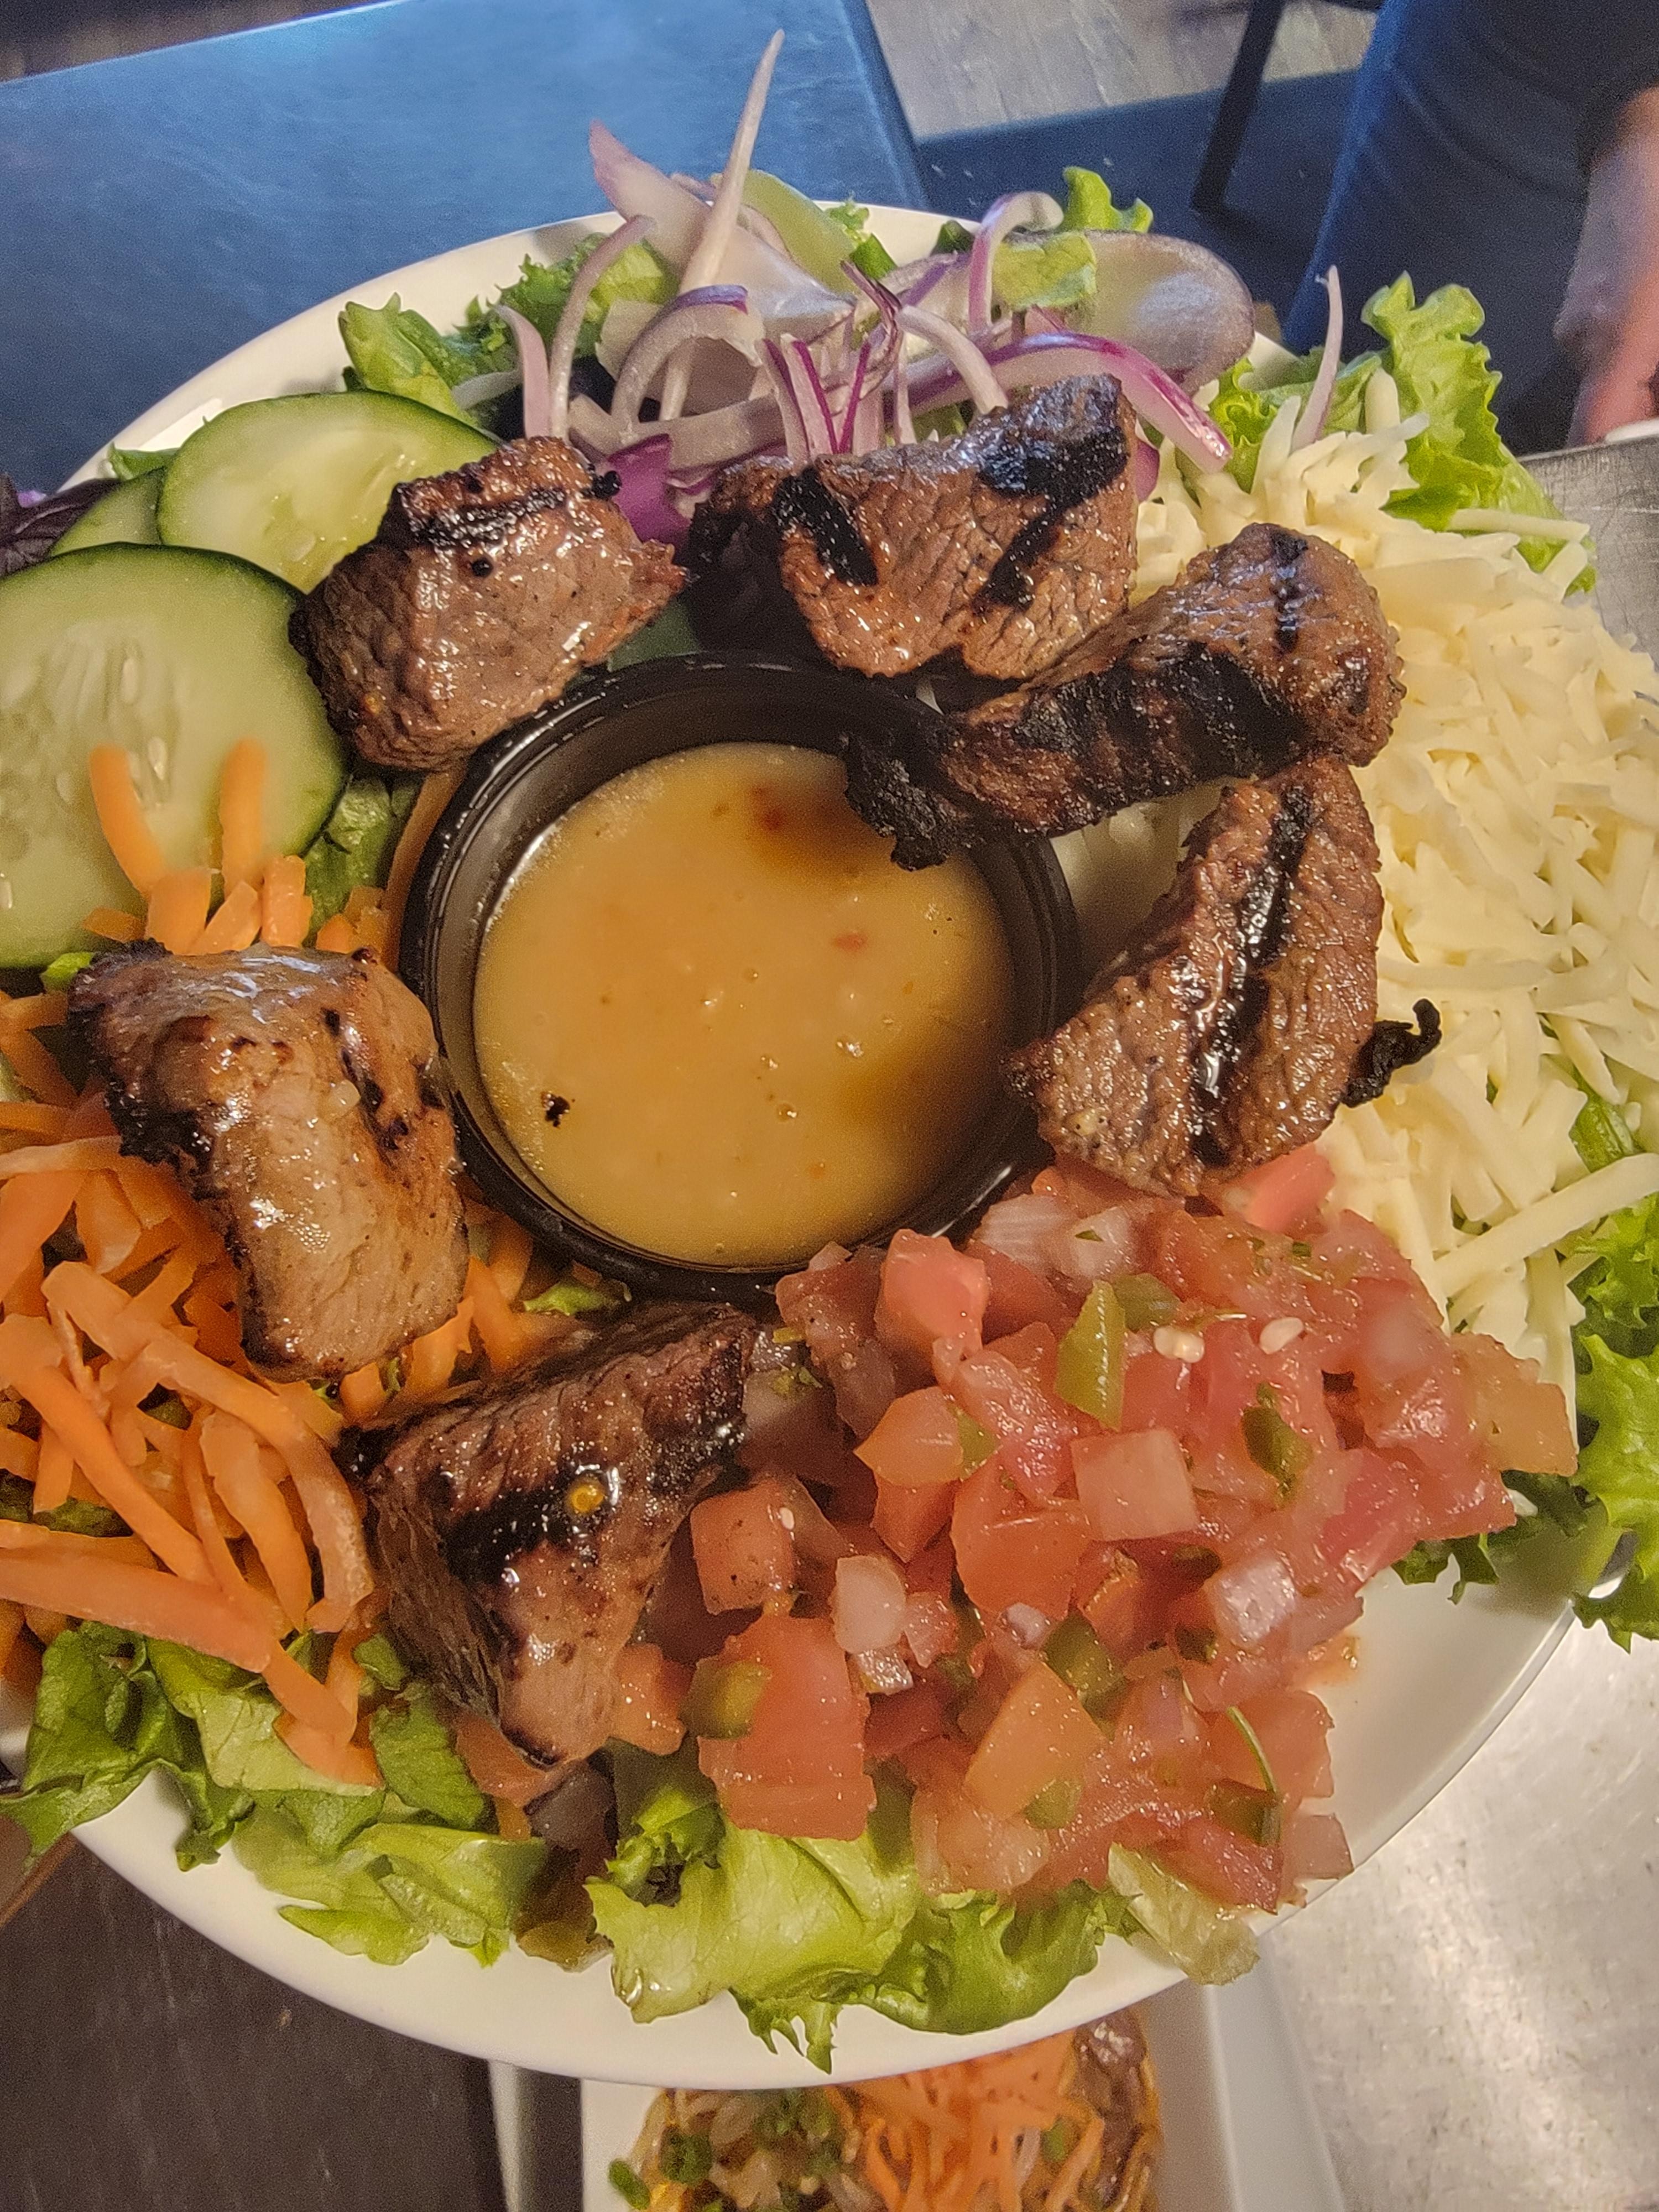 Steak tip salad